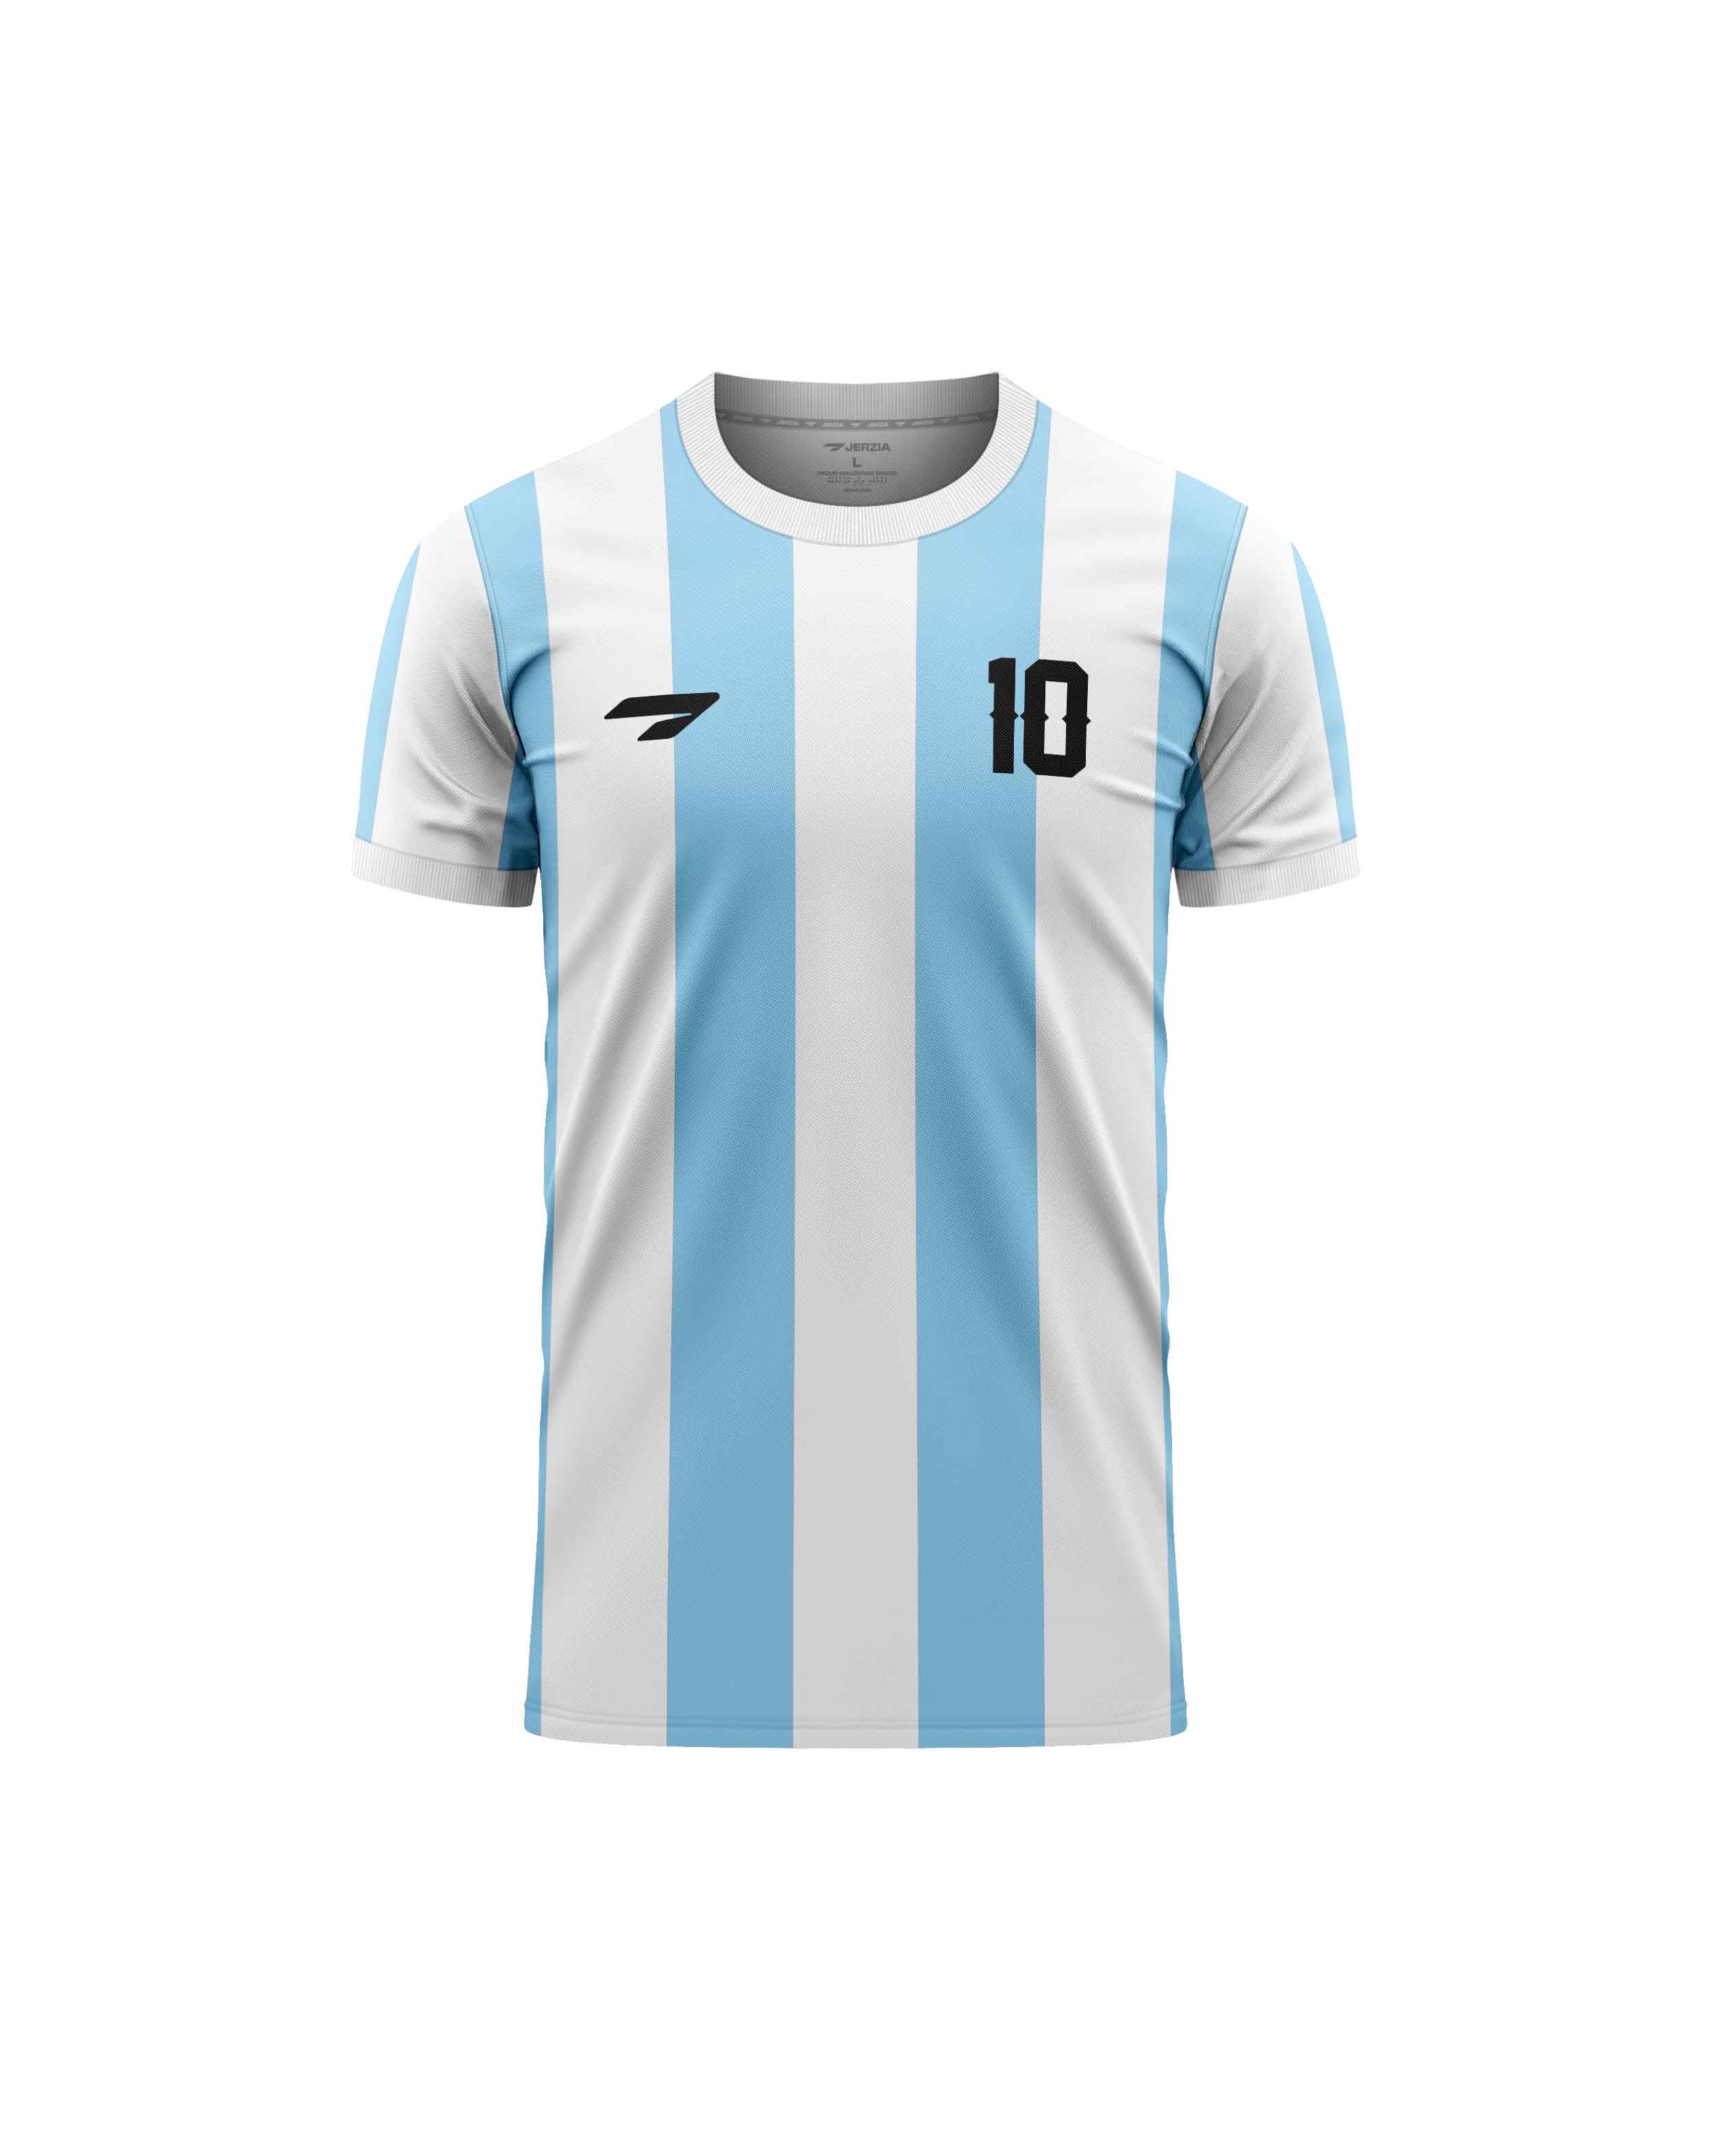 GOAT 10 Argentina SS Jersey